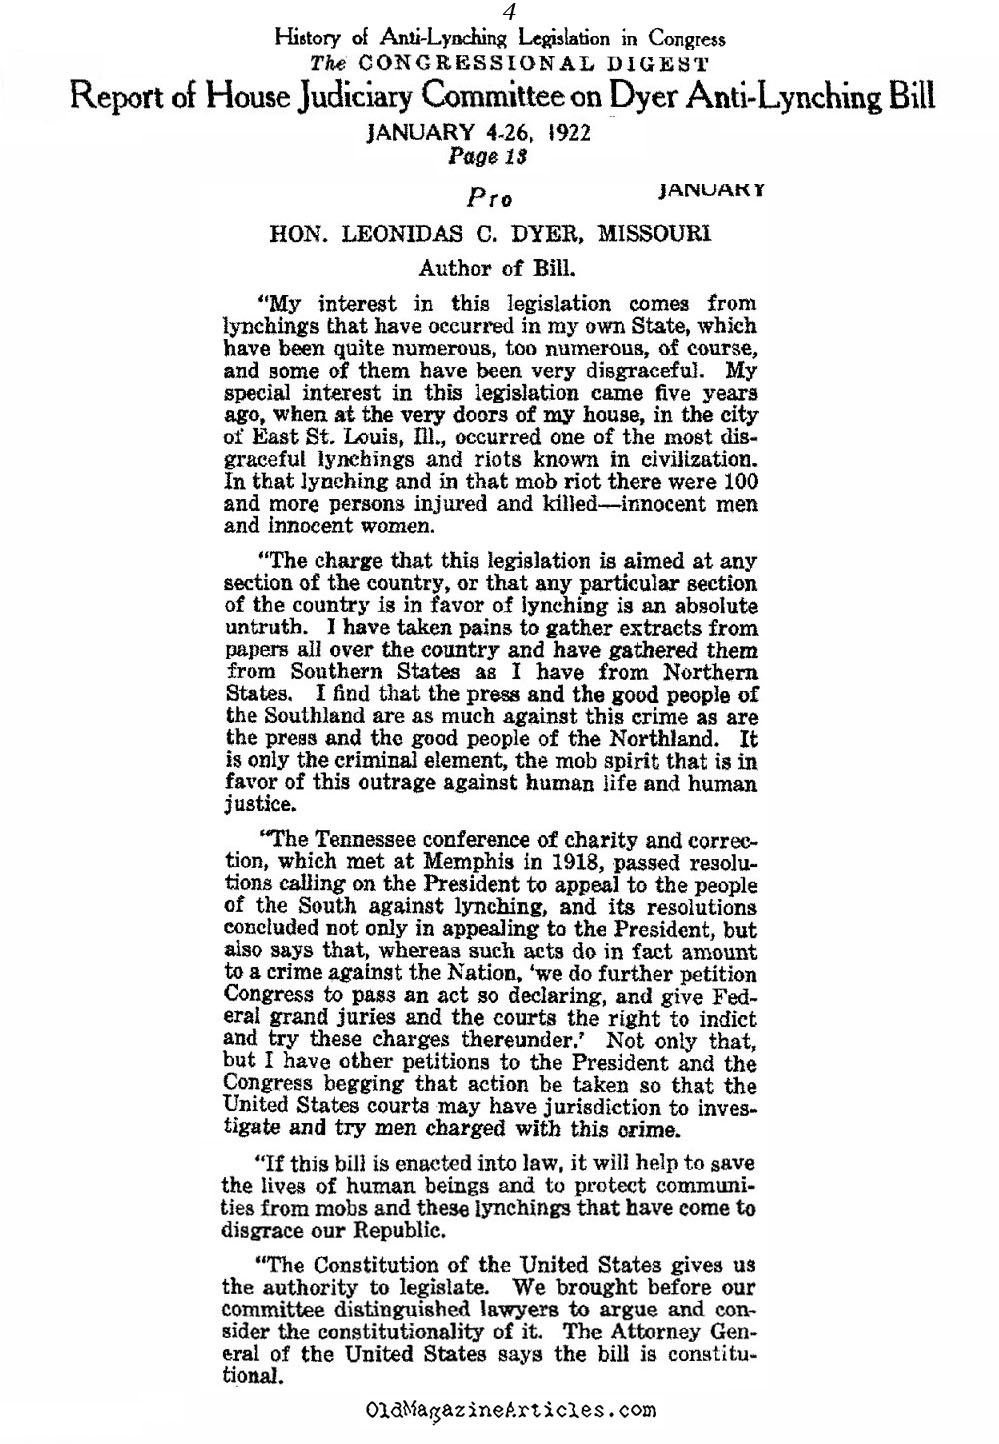 Anti-Lynching Law Debated in Congress (Congressional Digest, 1922)